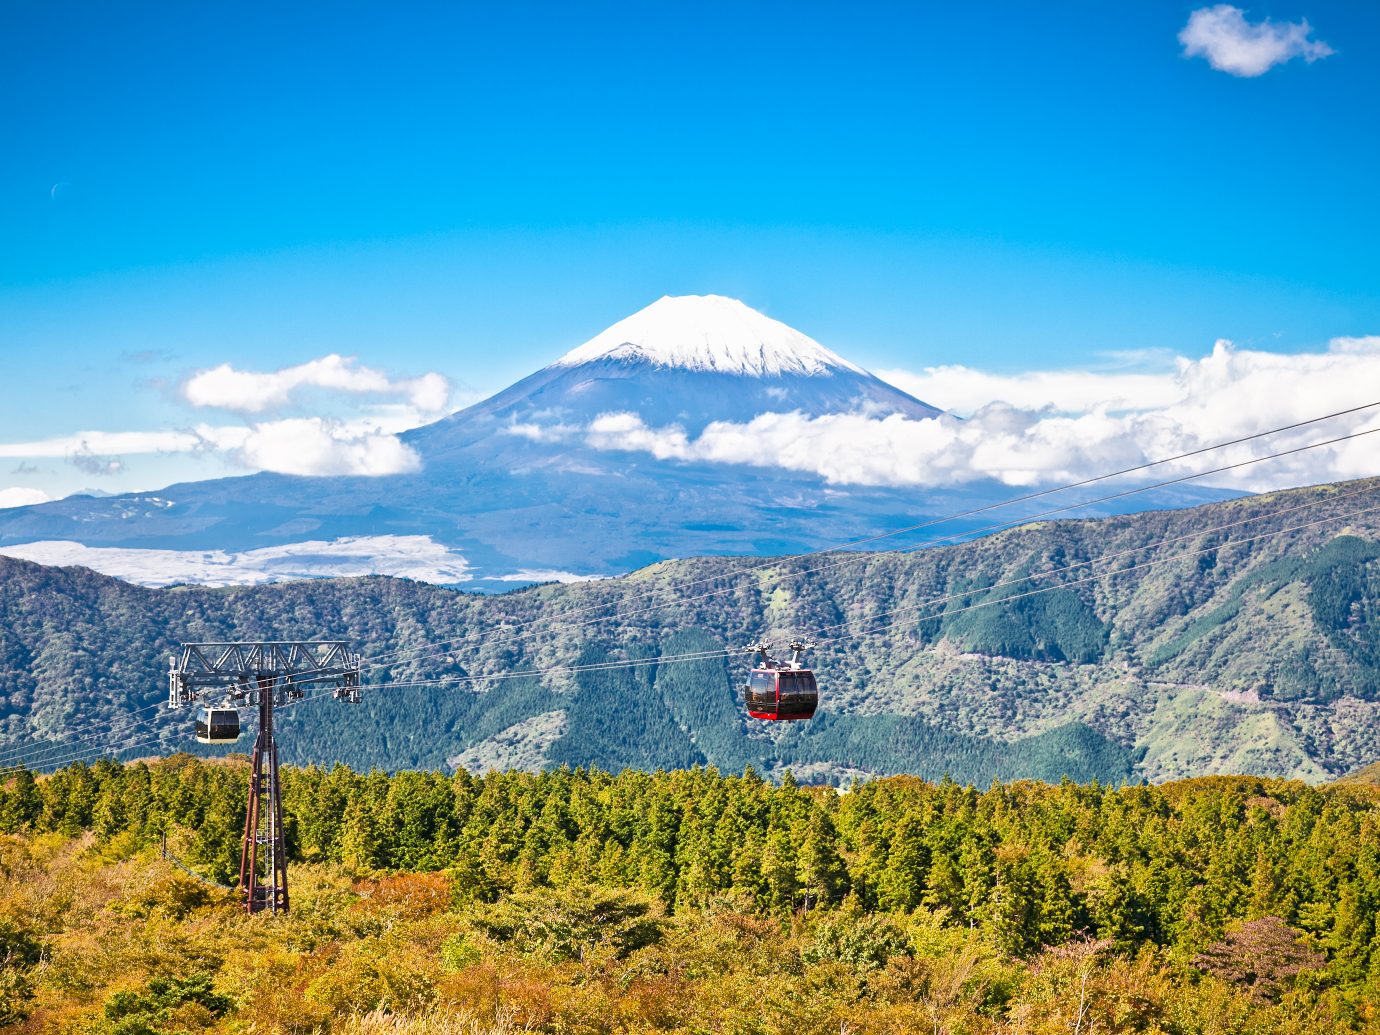 Ropeway and view of Mountain Fuji from Owakudani, Hakone. Japan.